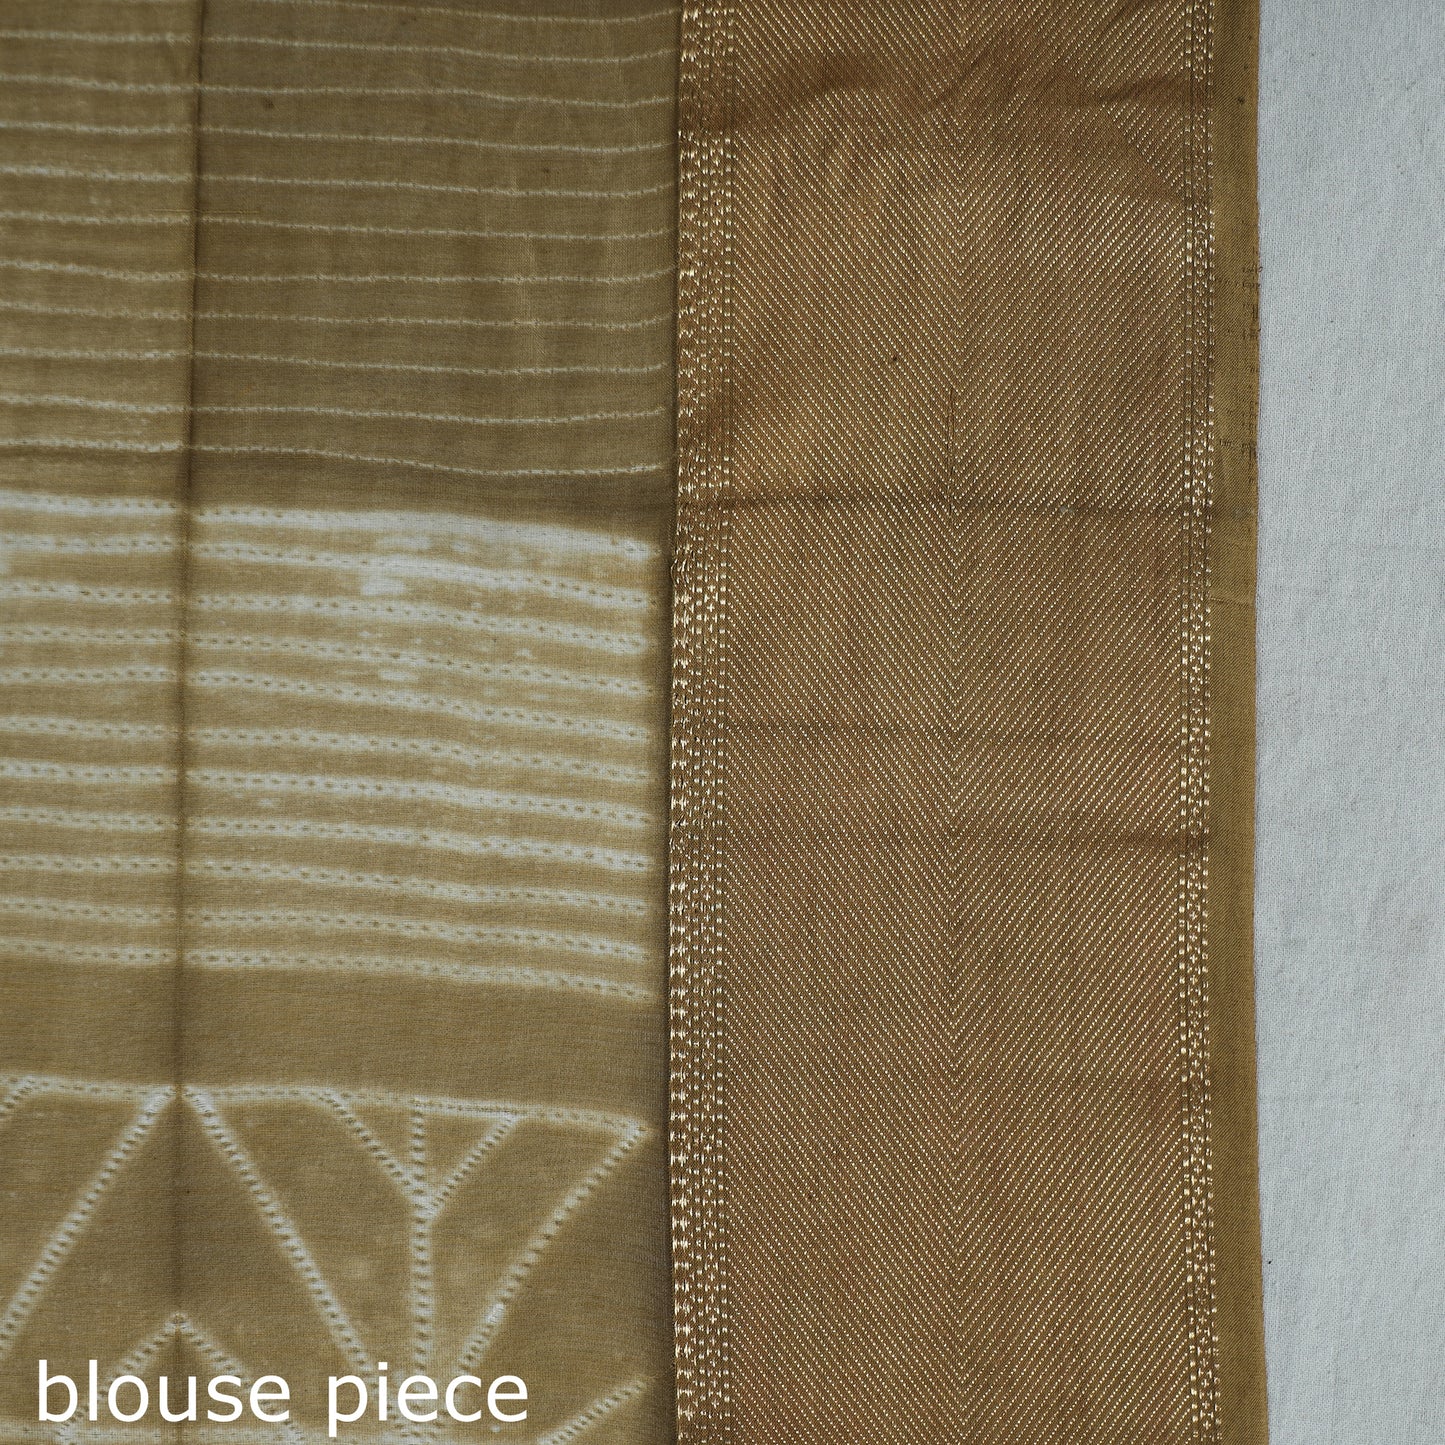 Green - Traditional Maheshwari Silk Handloom Shibori Tie-Dye Zari Work Saree 12